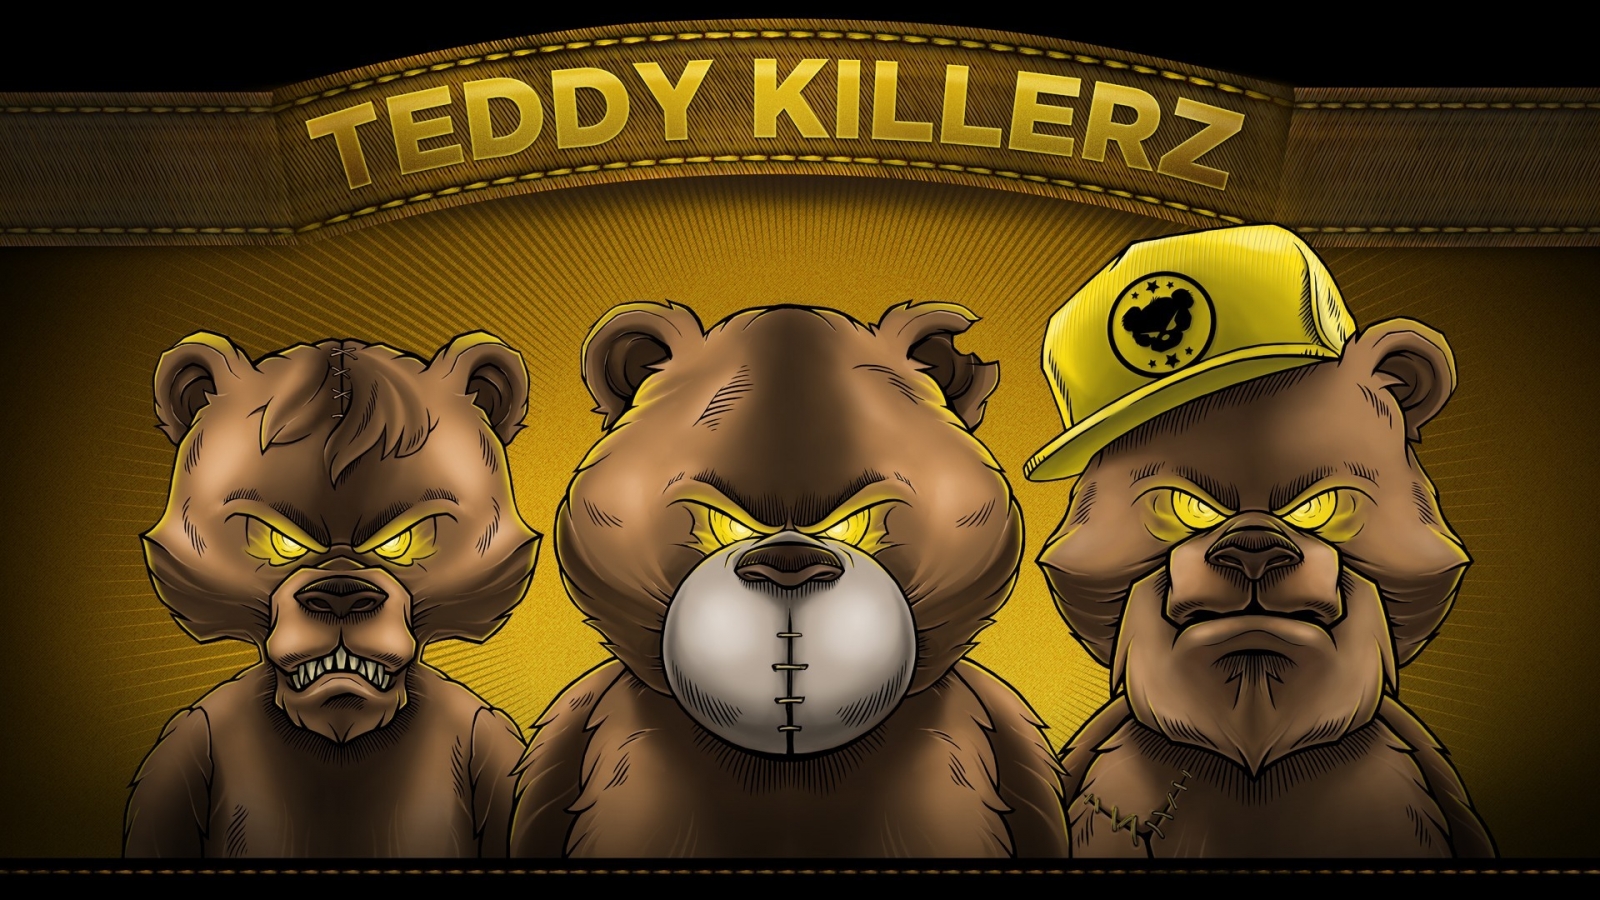 Teddy Killerz Poster for 1600 x 900 HDTV resolution